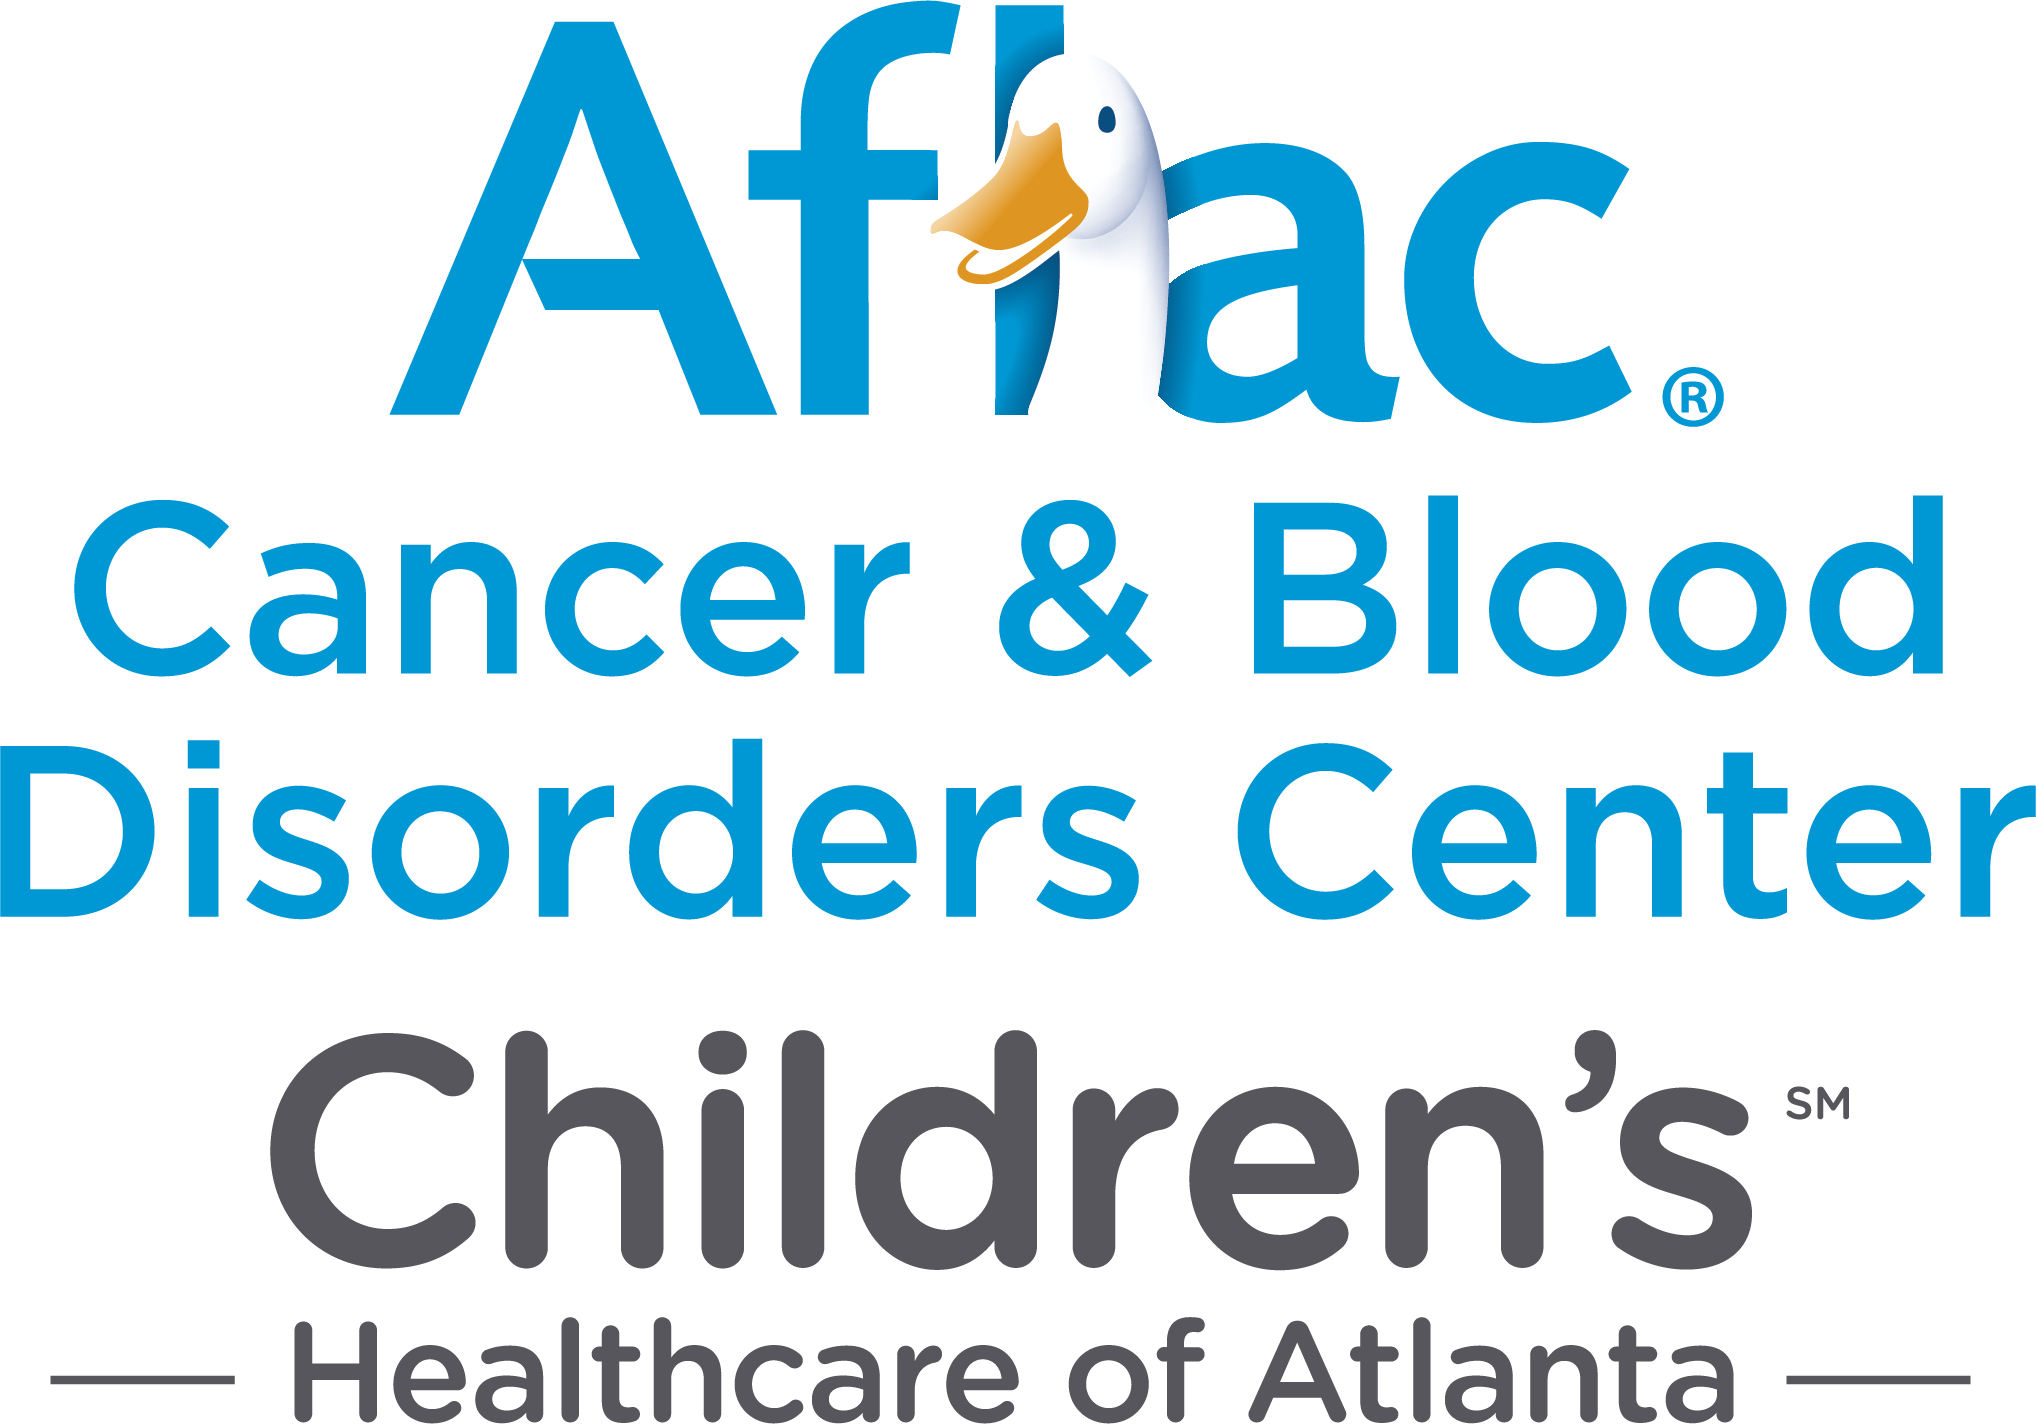 Aflac Cancer & Blood Disorders Center – Children's' Healthcare of Atlanta logo